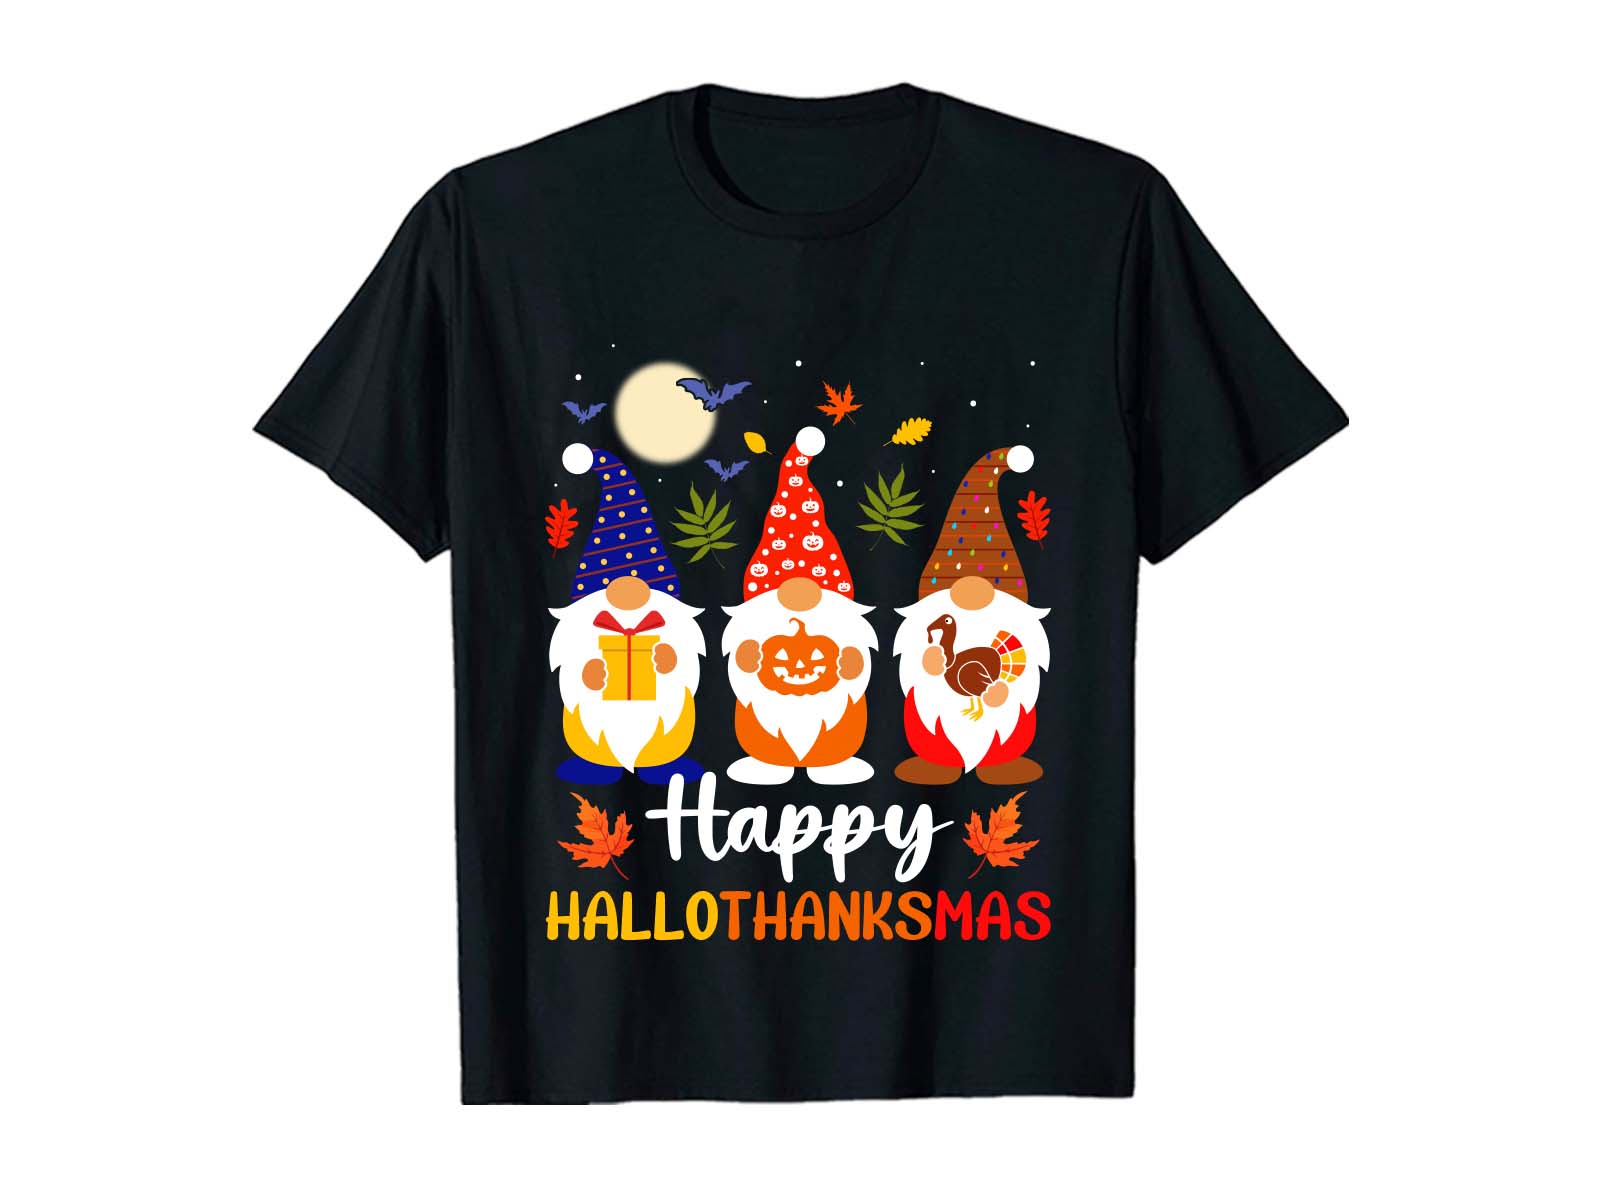 Thanksgiving Typography, Typography shirt, Thanksgiving Typography t-shirt,  Thanksgiving tshirt, Typography shirt, Typography tshirt, Vector Shirt, Thanksgiving shirt,